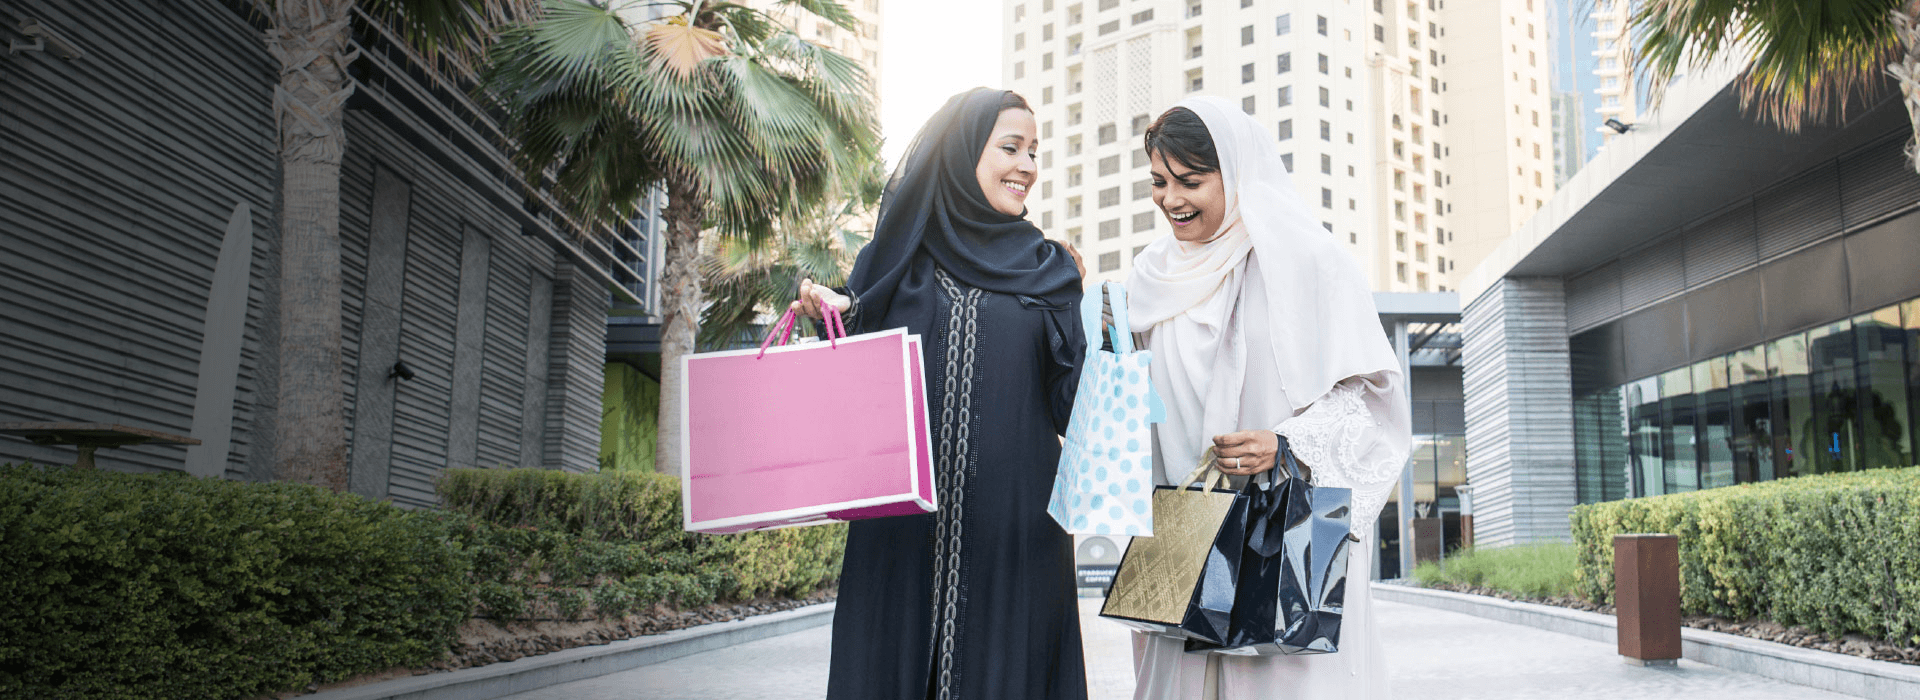 Dubai Shopping Festival Packages